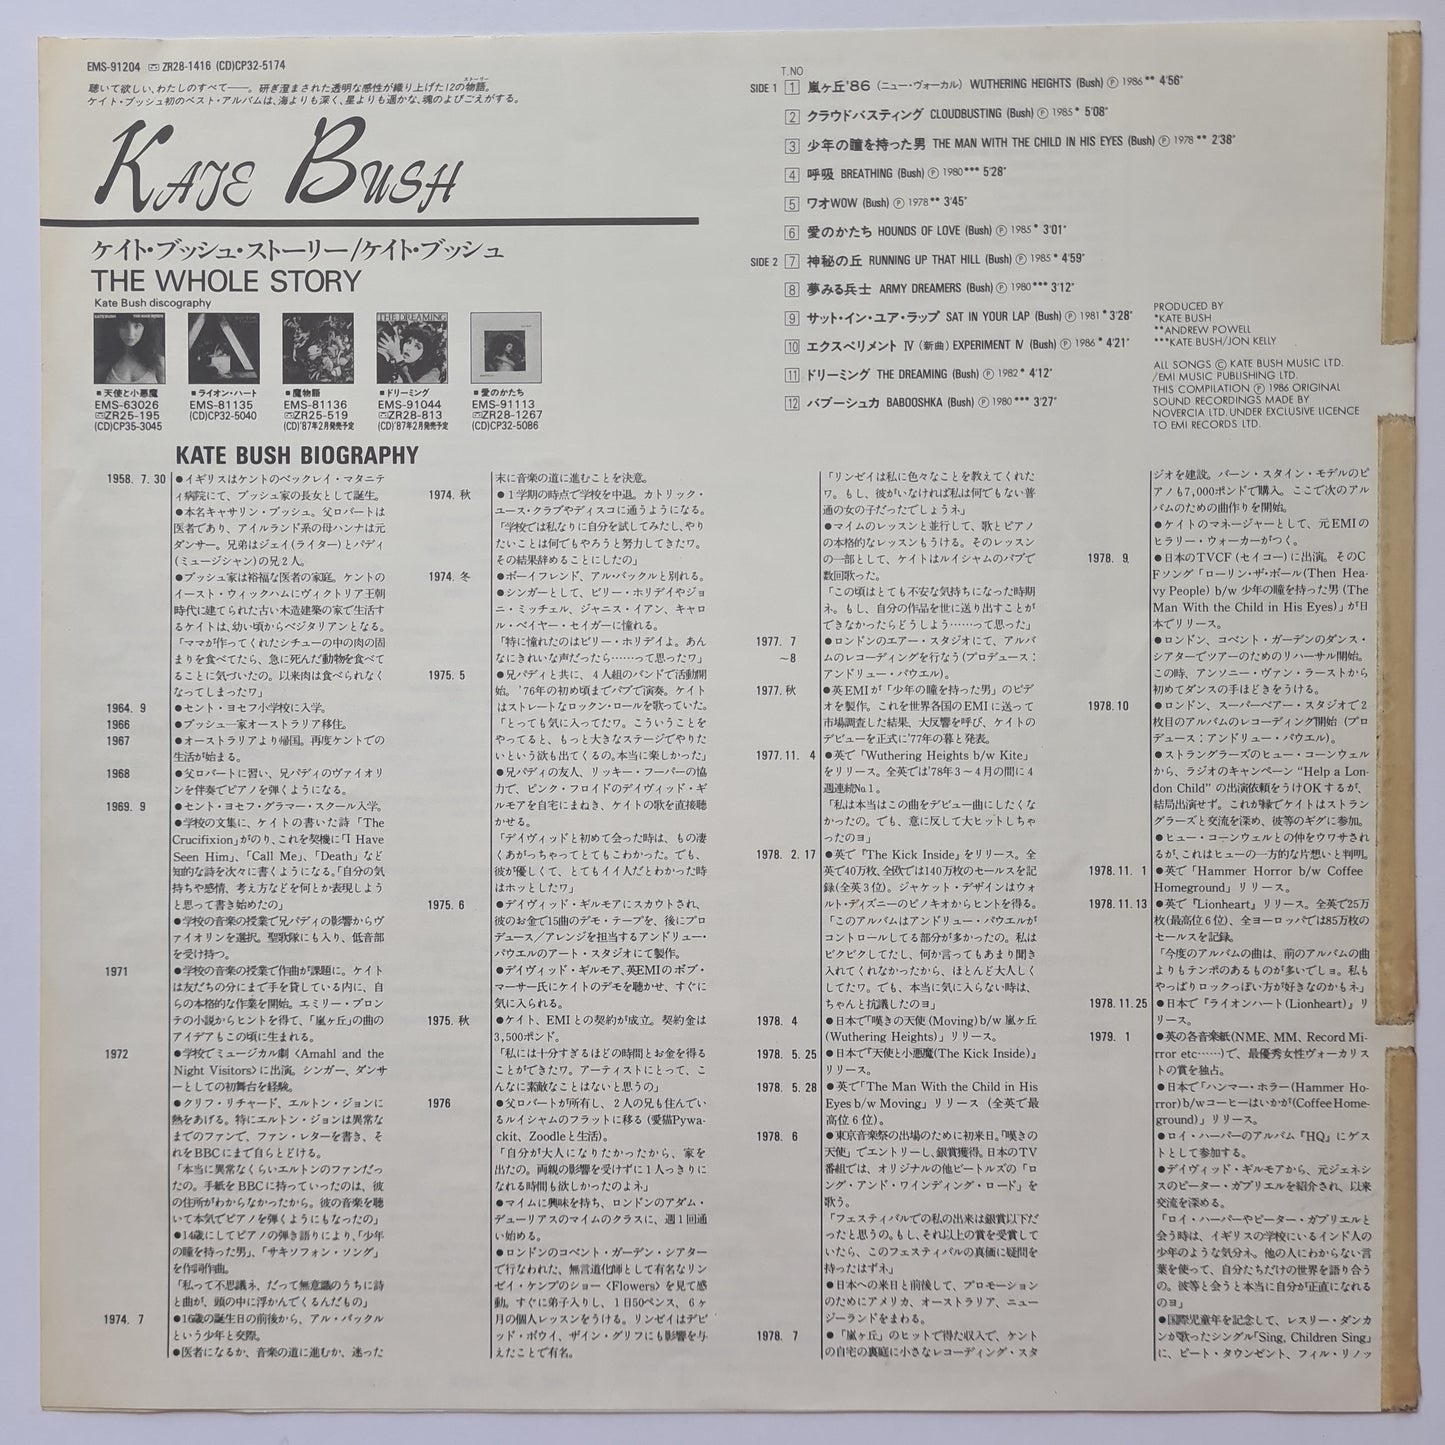 Kate Bush – The Whole Story (Greatest Hits) - 1986 (Japanese Gatefold Pressing) - Vinyl Record